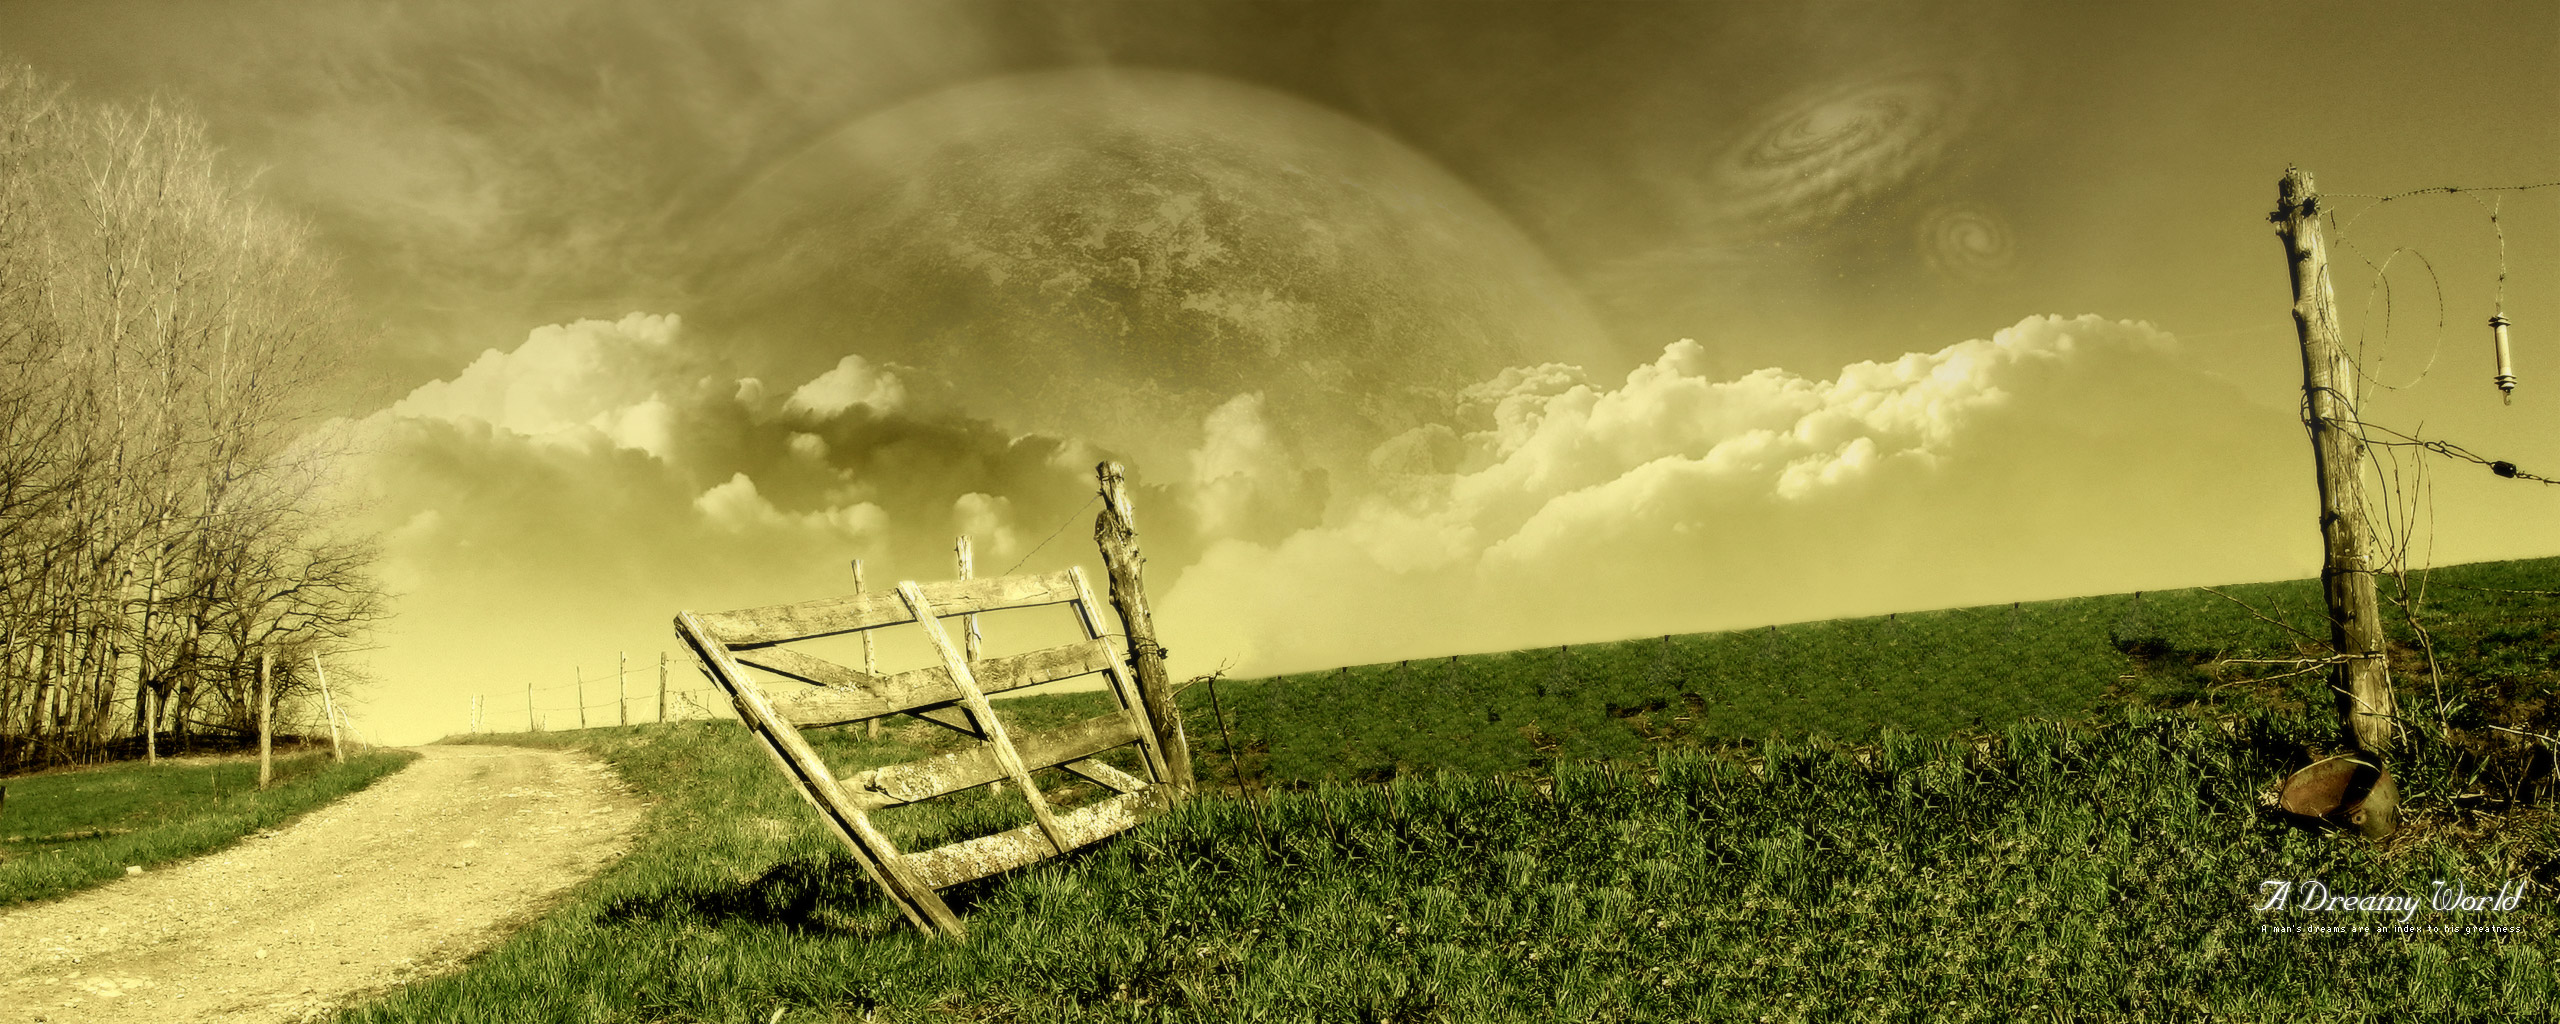 field, fence, earth, galaxy, moon, a dreamy world, space